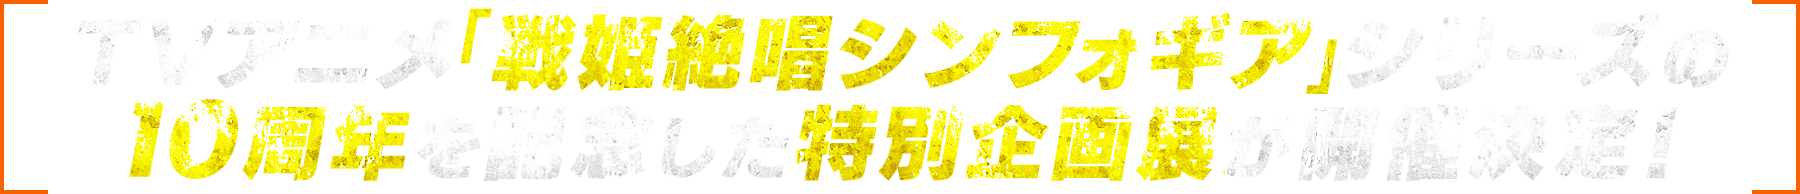 TVアニメ「戦姫絶唱シンフォギア」シリーズの10周年を記念した特別企画展が開催決定！